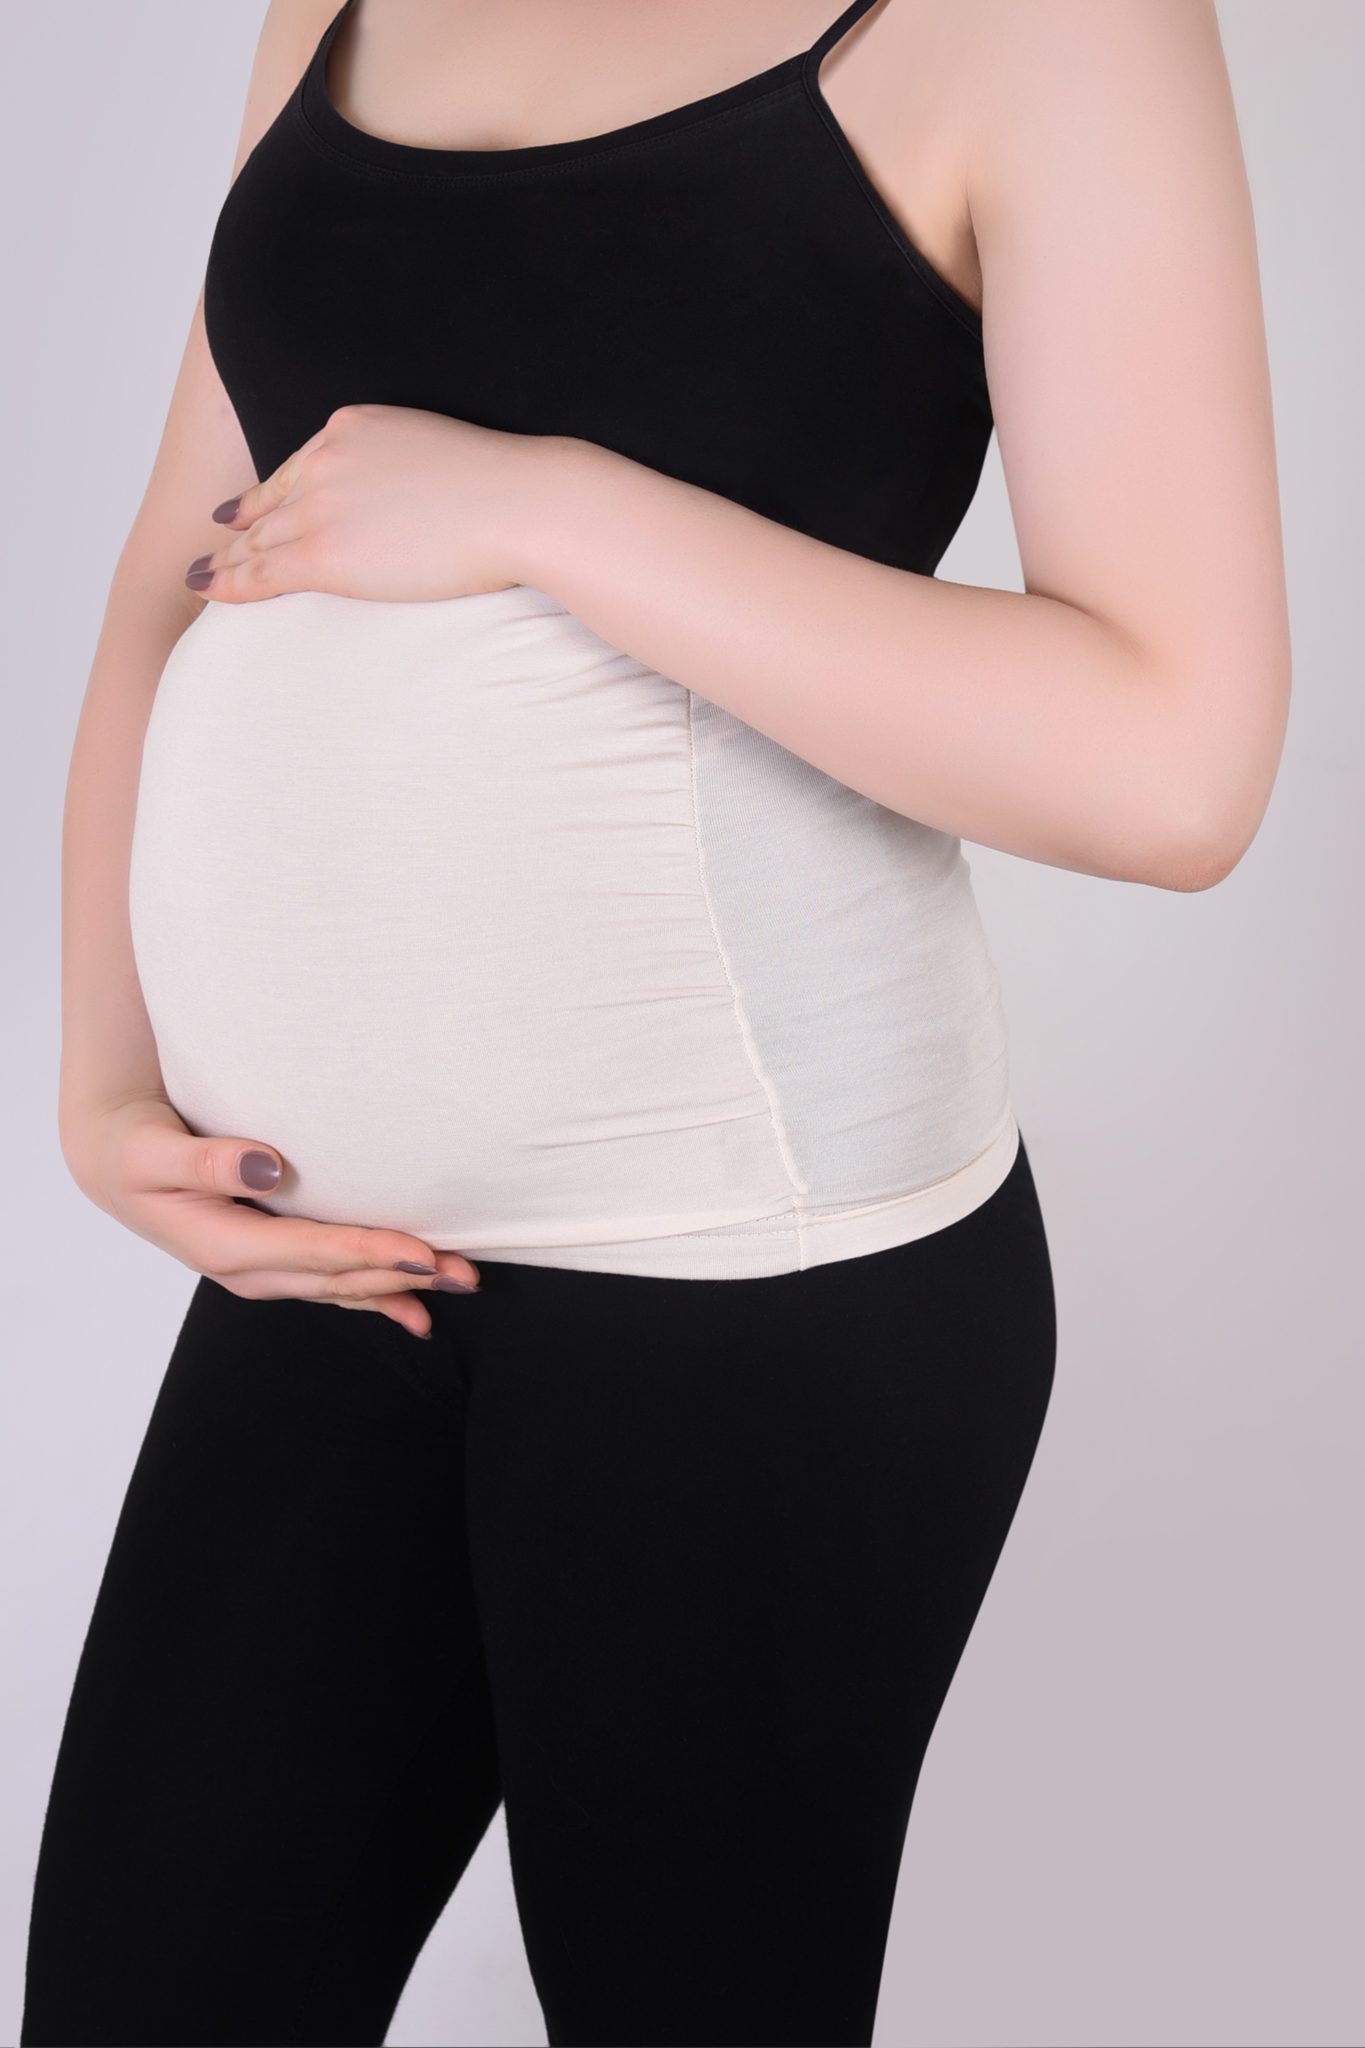 ZAMAKS Radiation Protection Maternity Abdominal Support,EMF